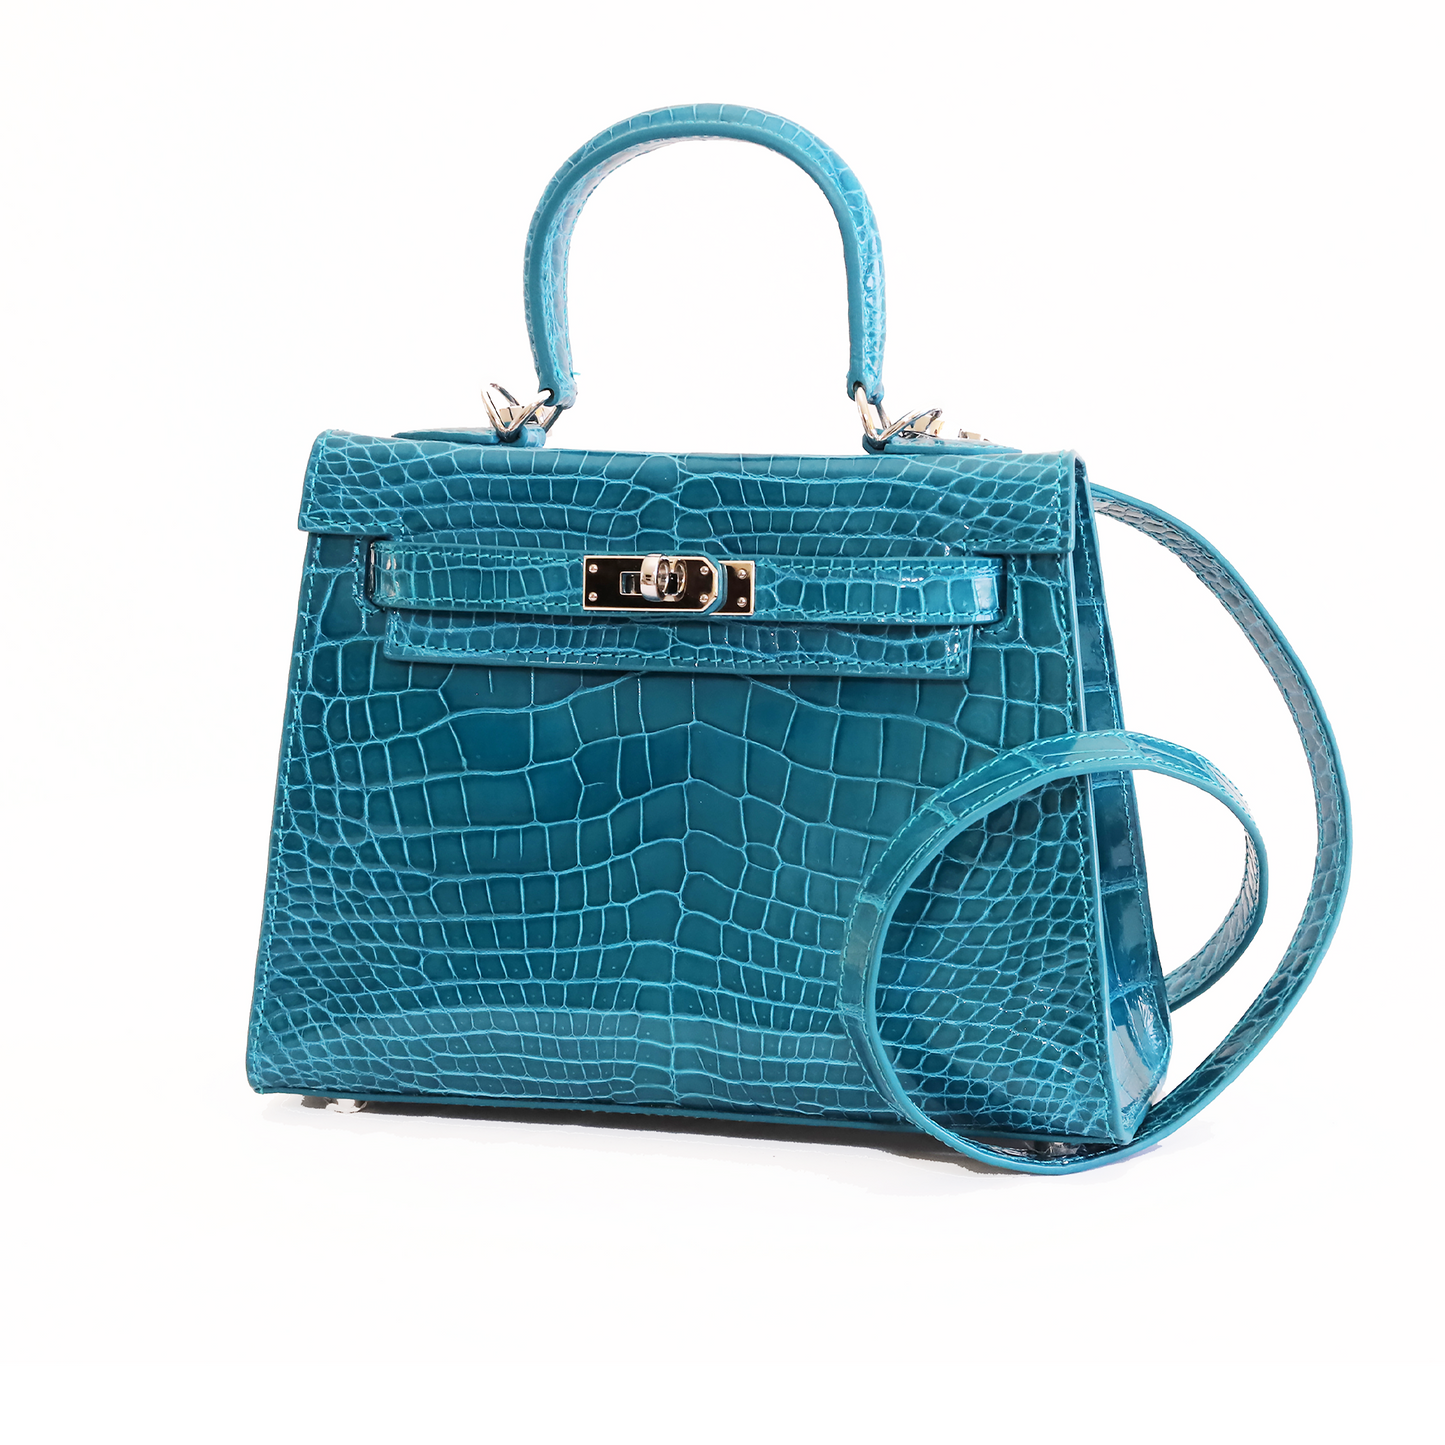 Princess Handbag in Shiny Turquoise Crocodile Belly Skin